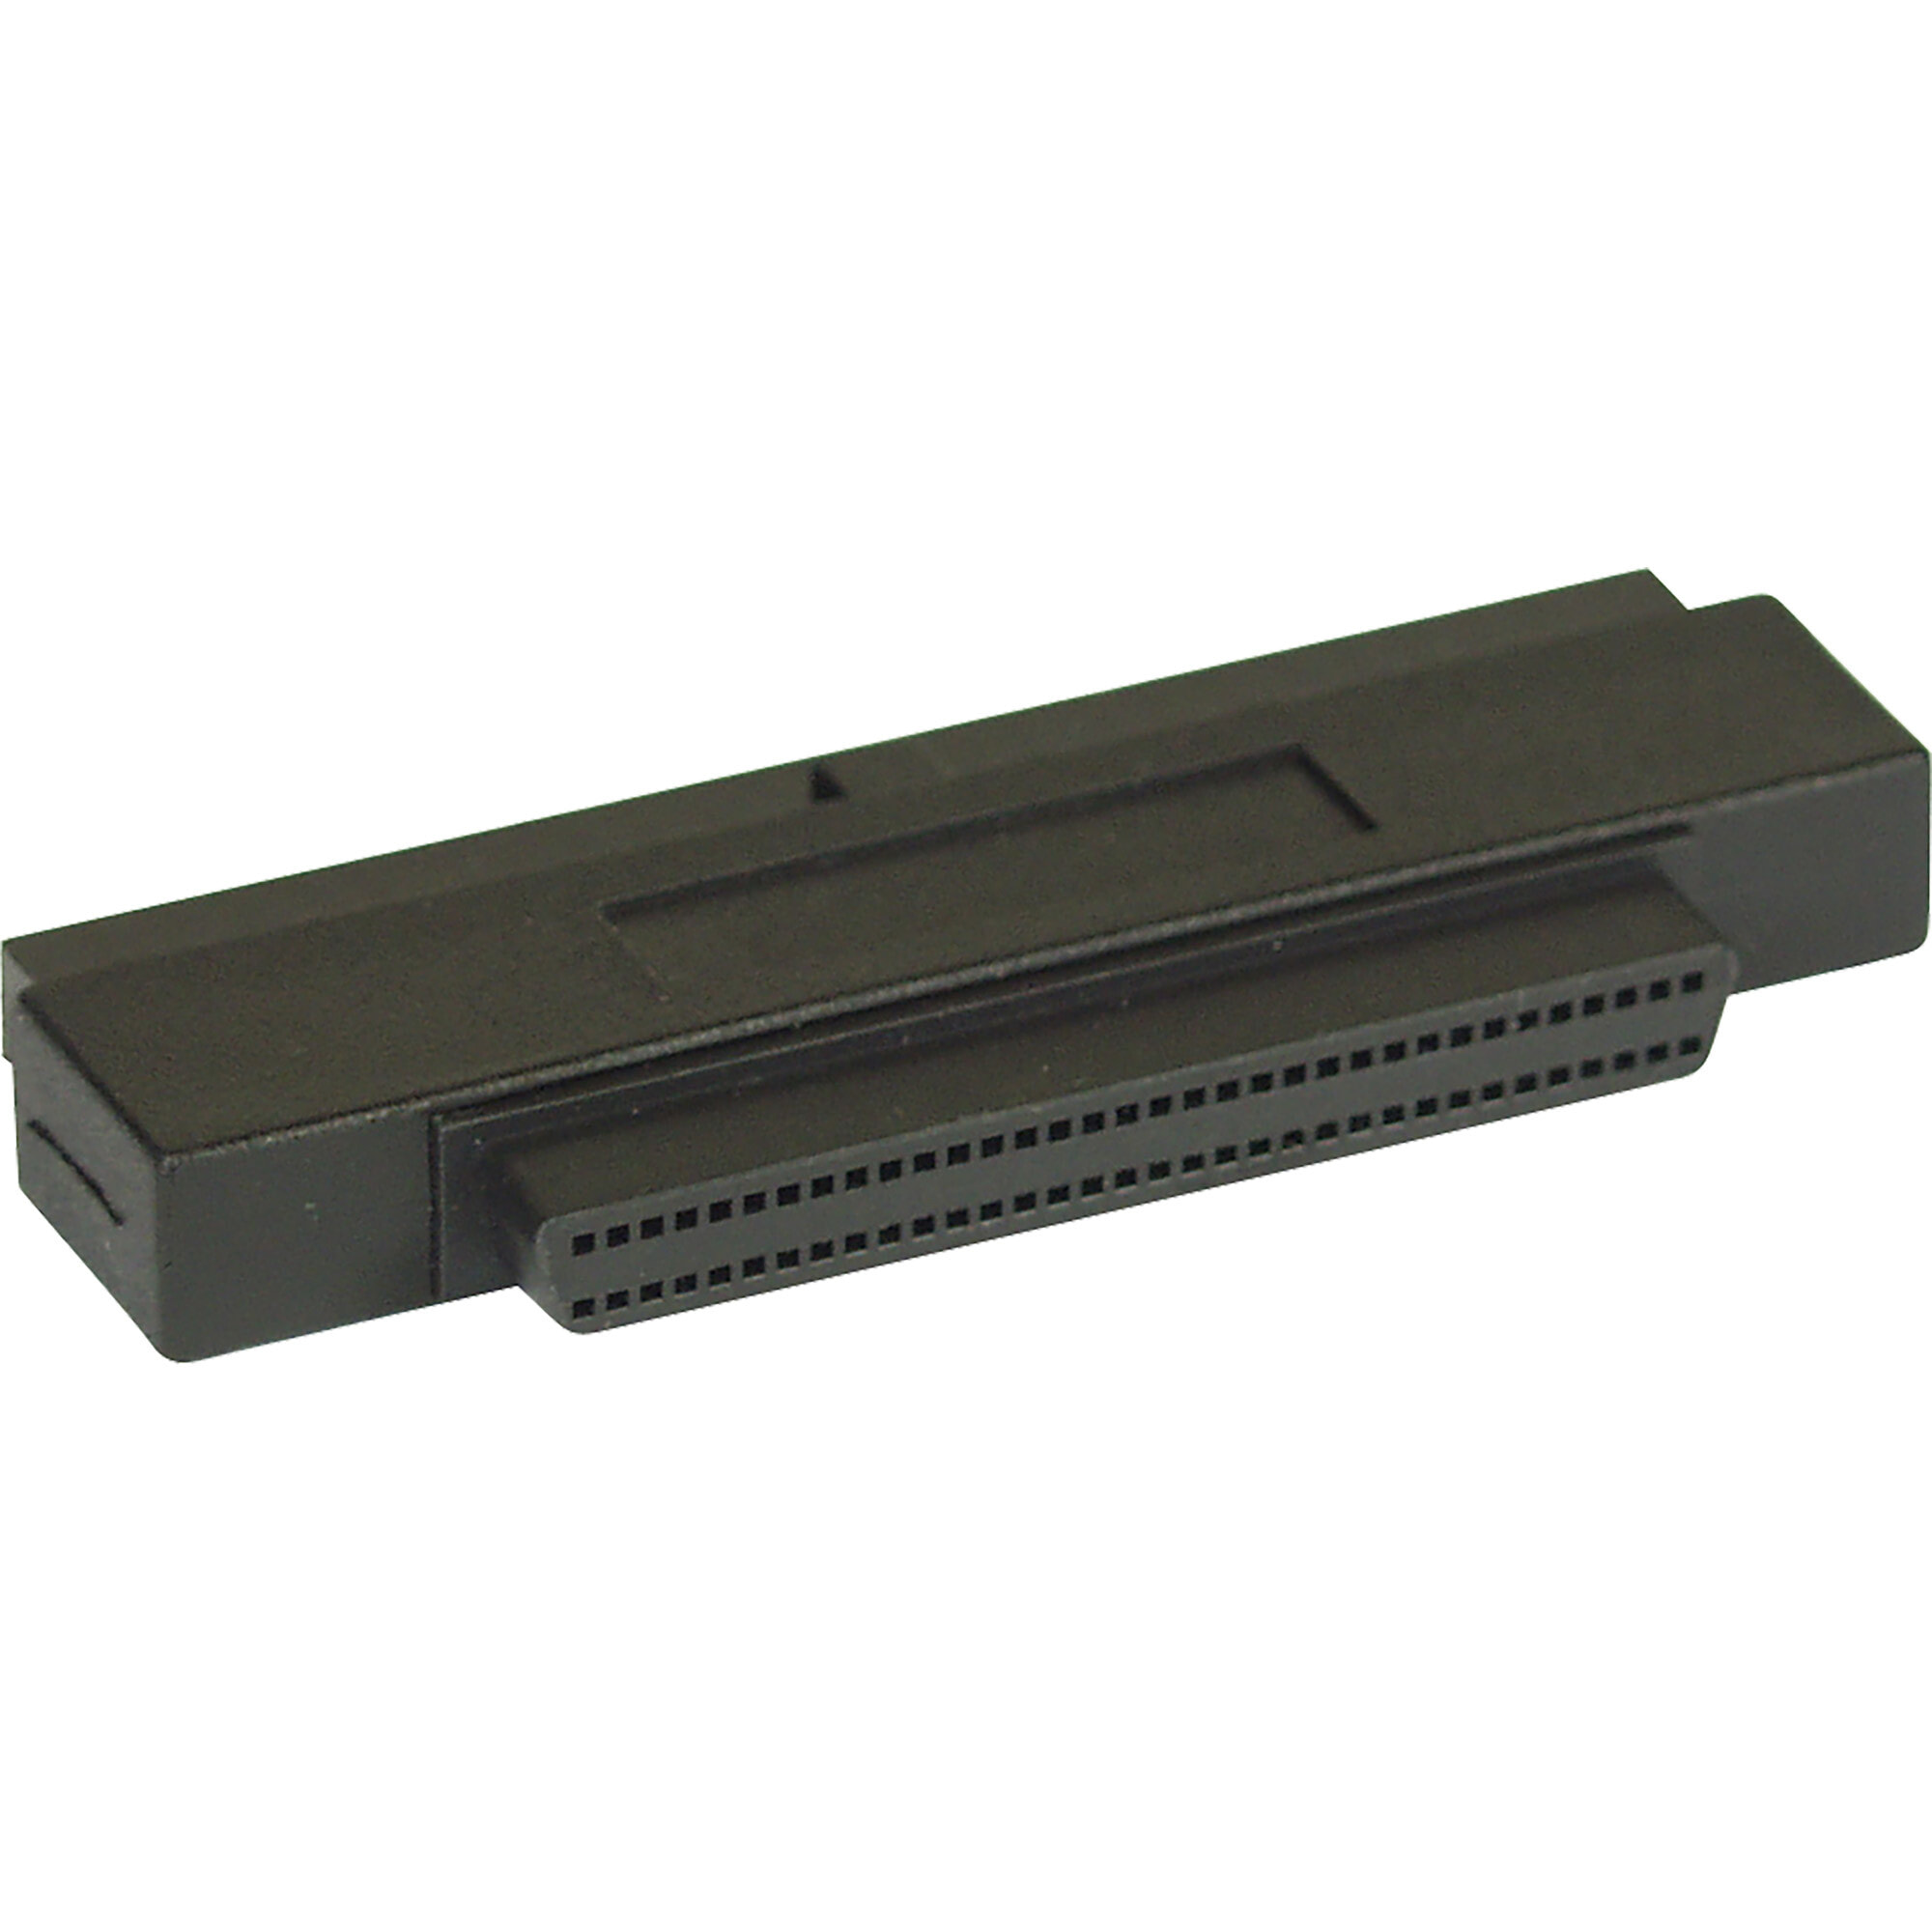 SCSI III Adapter internal 50 Pin IDC female to 68 Pin mini Sub-D female - SCSI III - Black